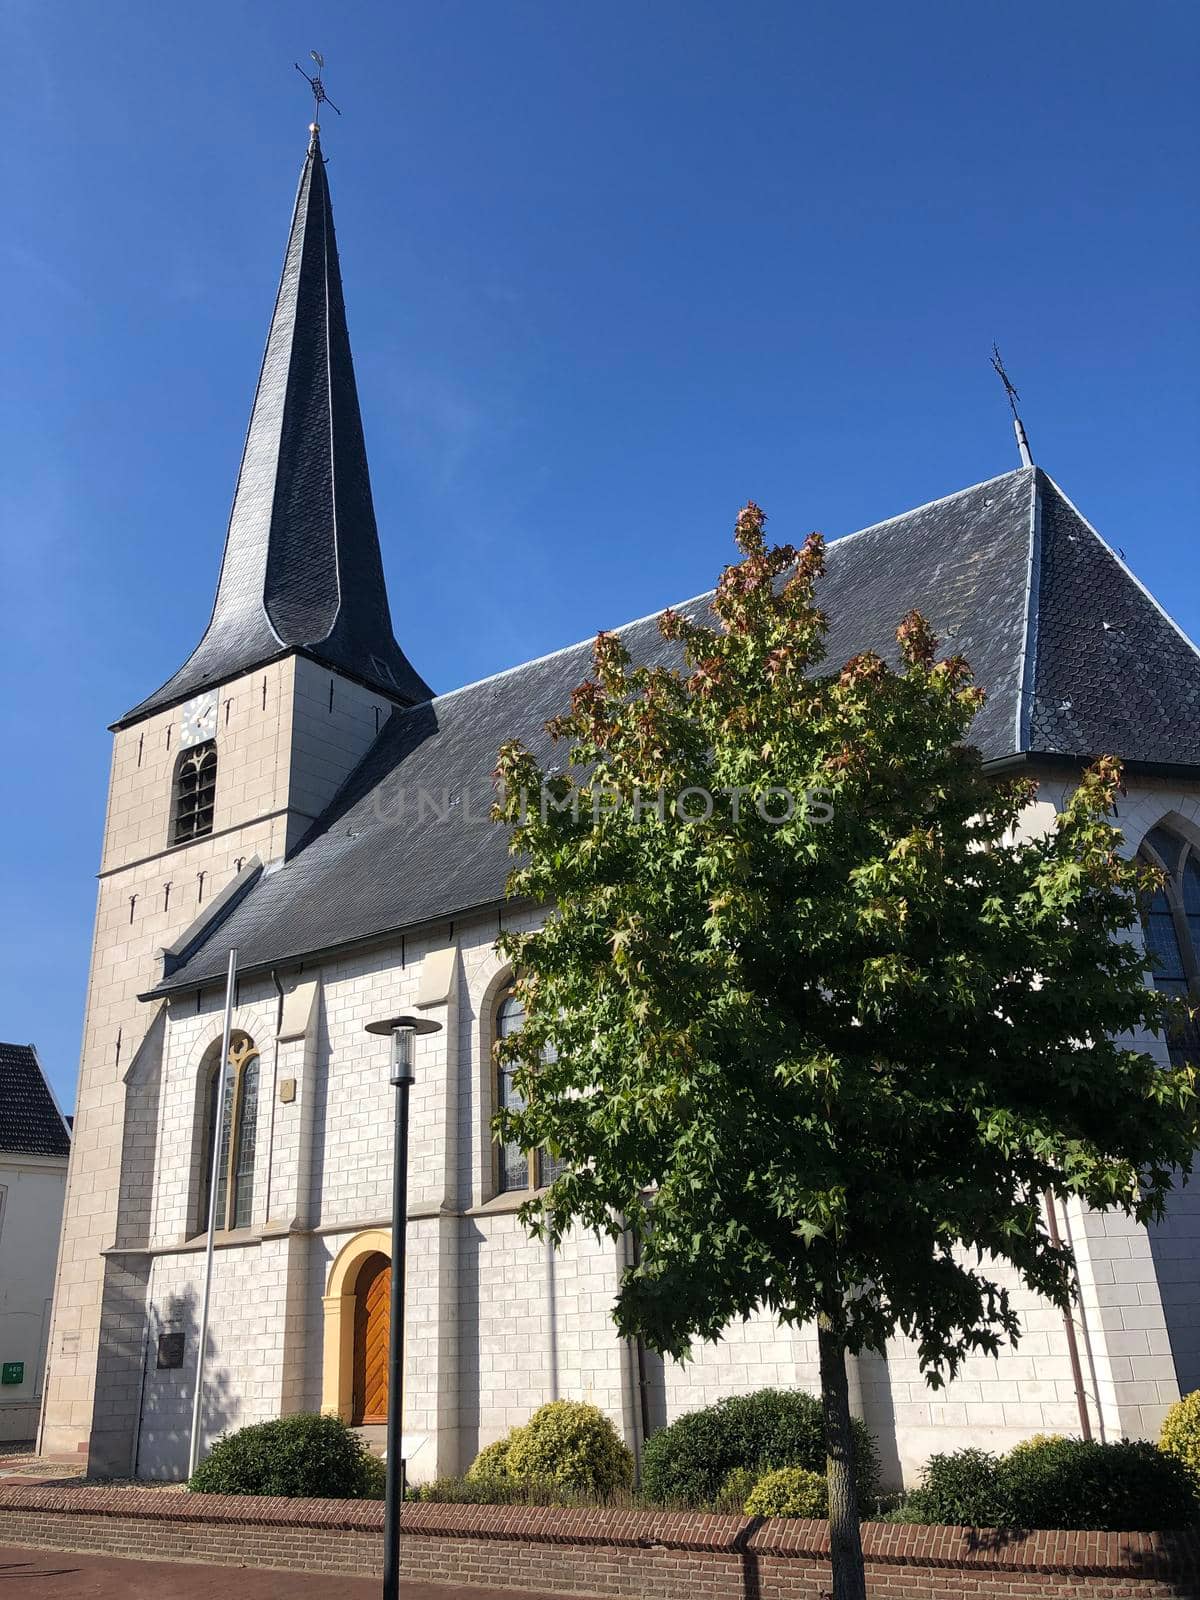 Johannes church in Lichtenvoorde, The Netherlands